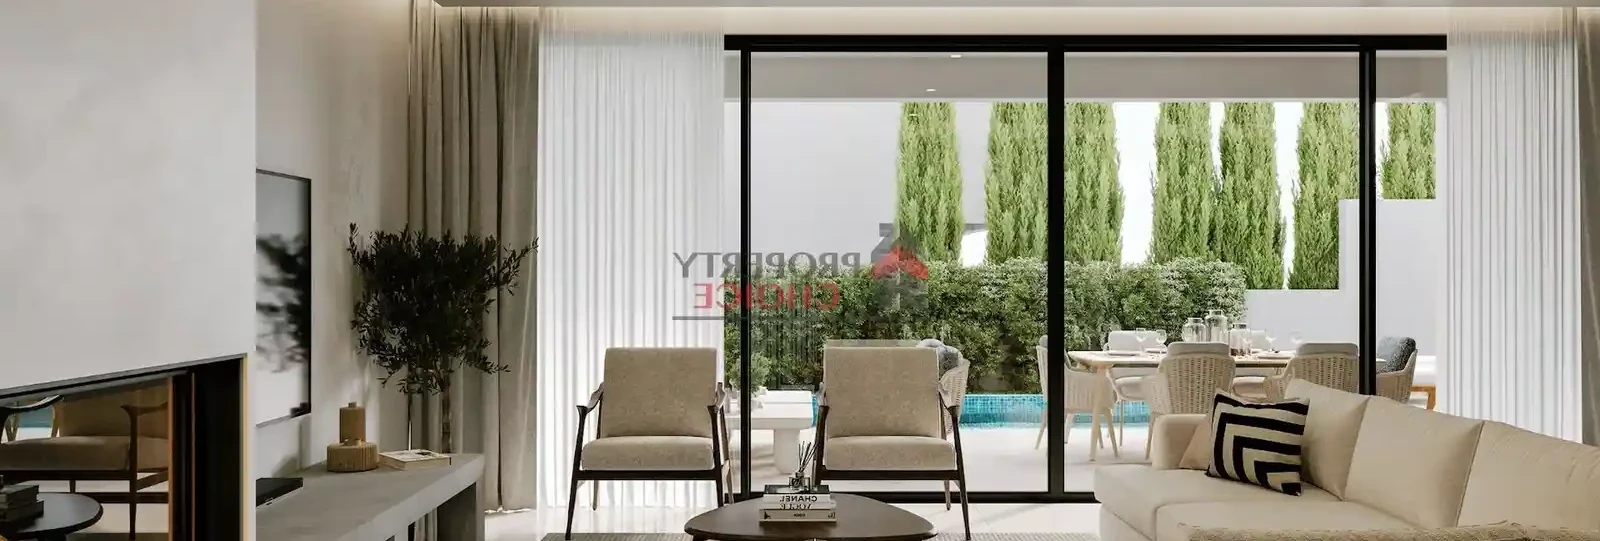 3-bedroom villa fоr sаle €420.000, image 1